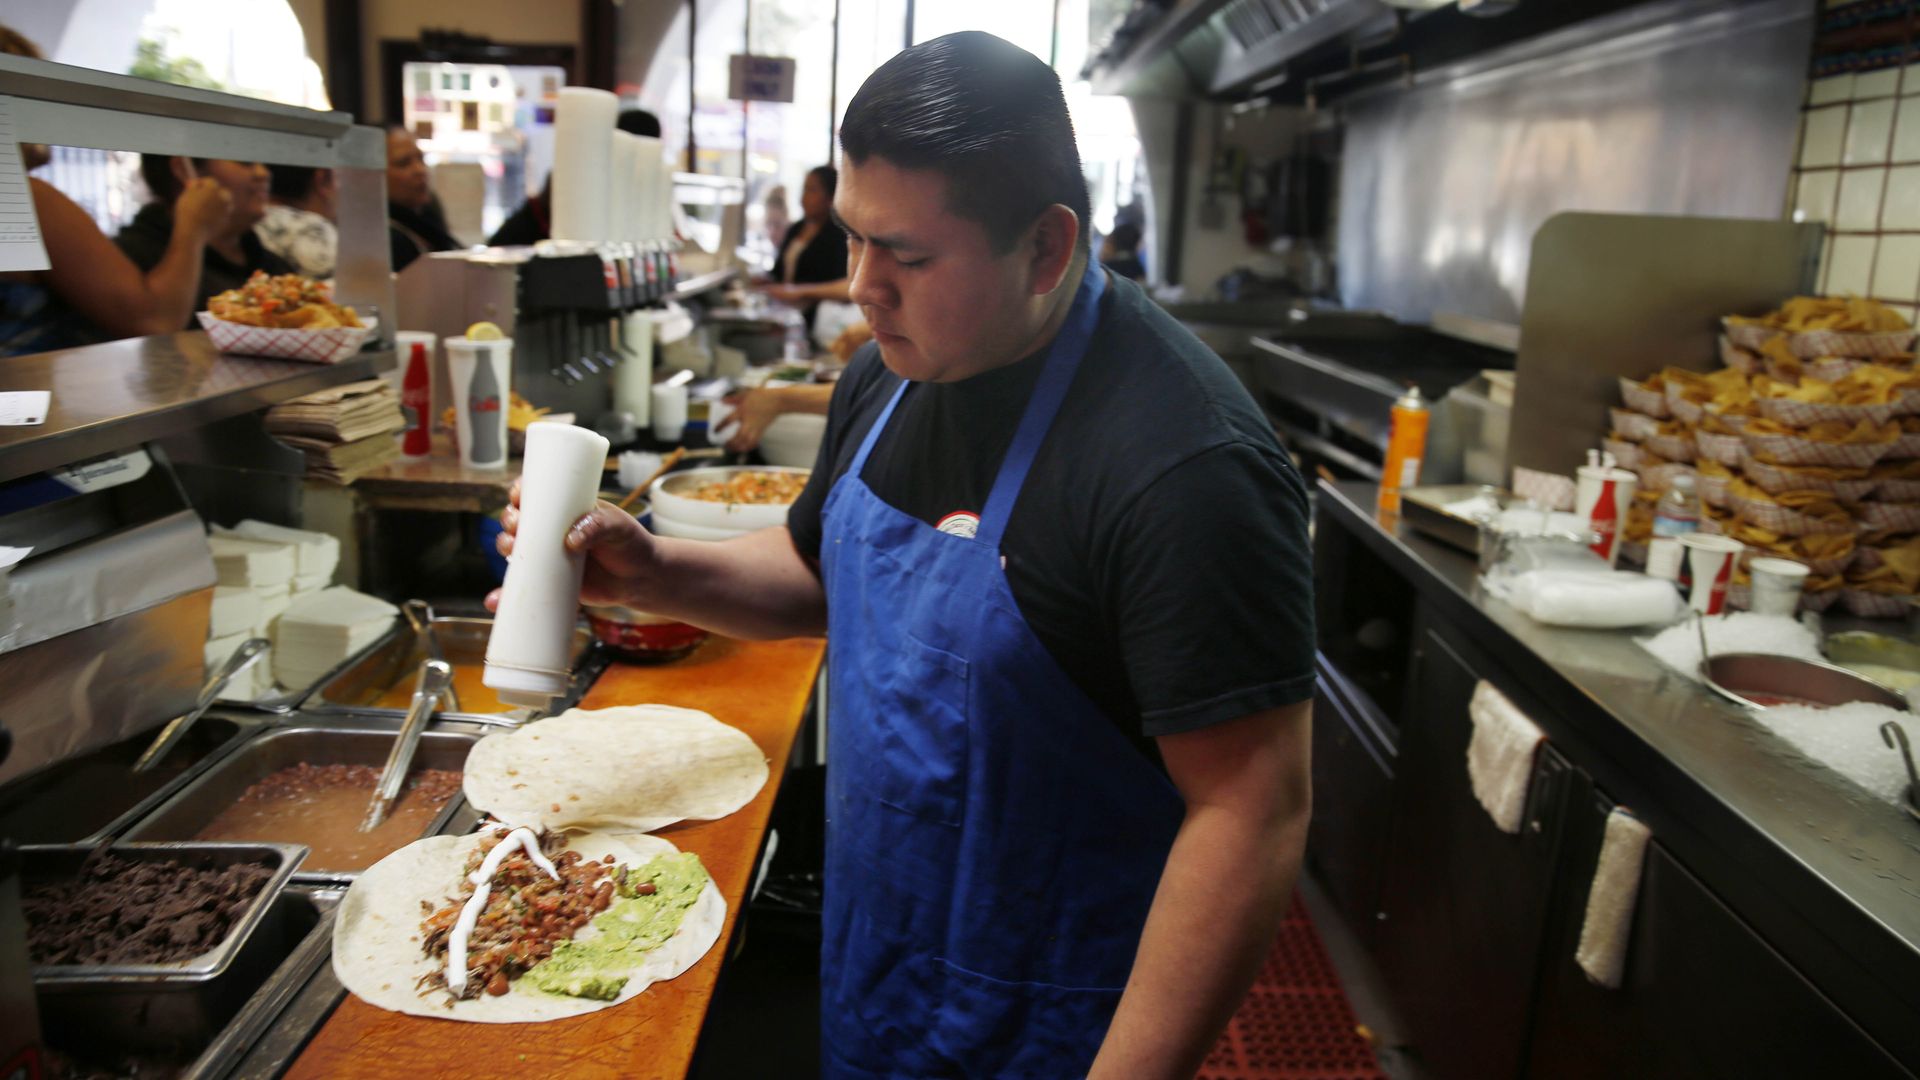 A man wearing a blue apron prepares a burrito in a taqueria.